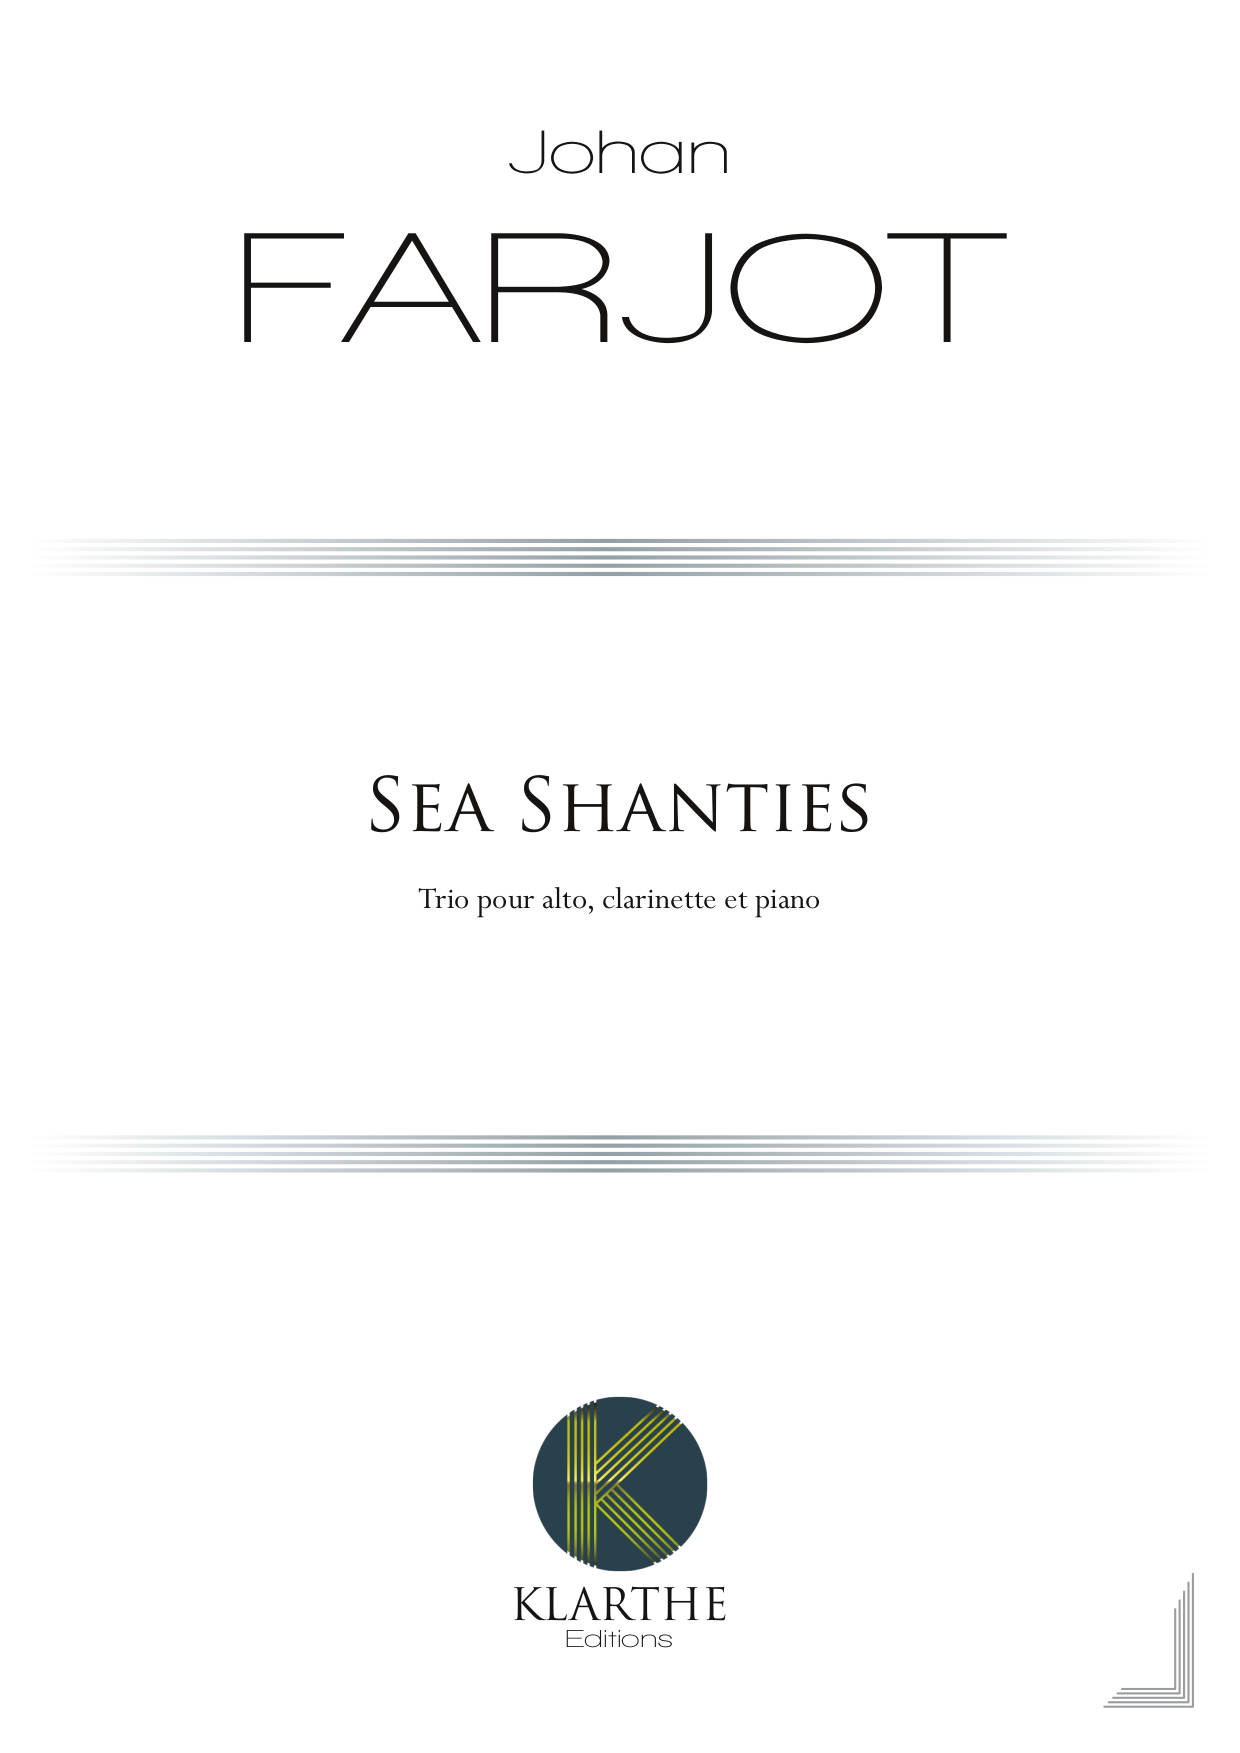 Sea Shanties (FARJOT JOHAN)